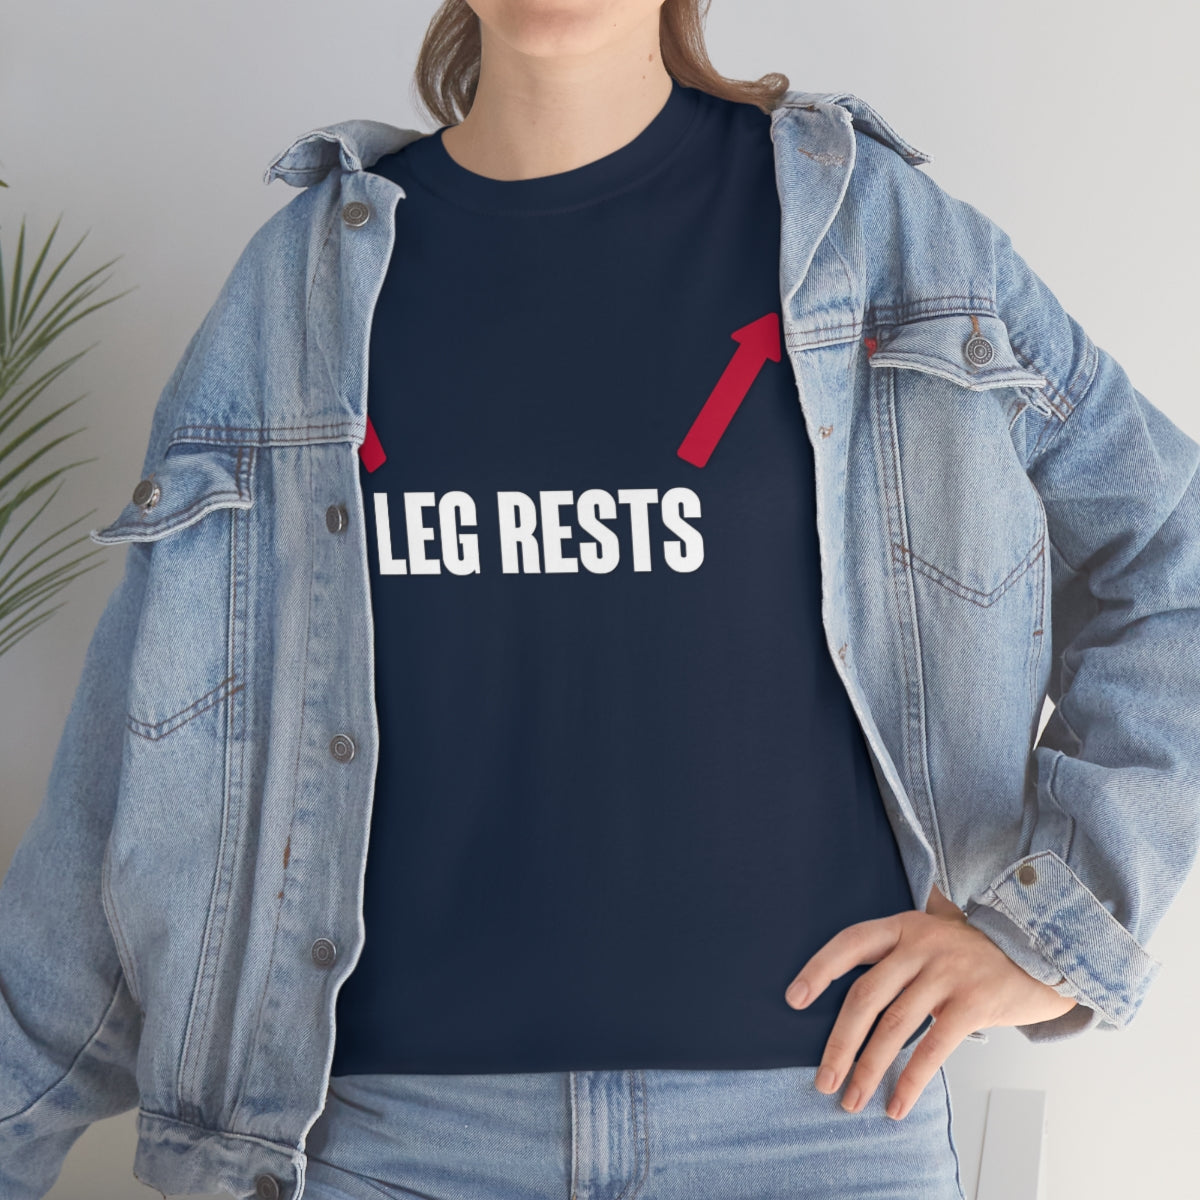 LEG RESTS T-SHIRT